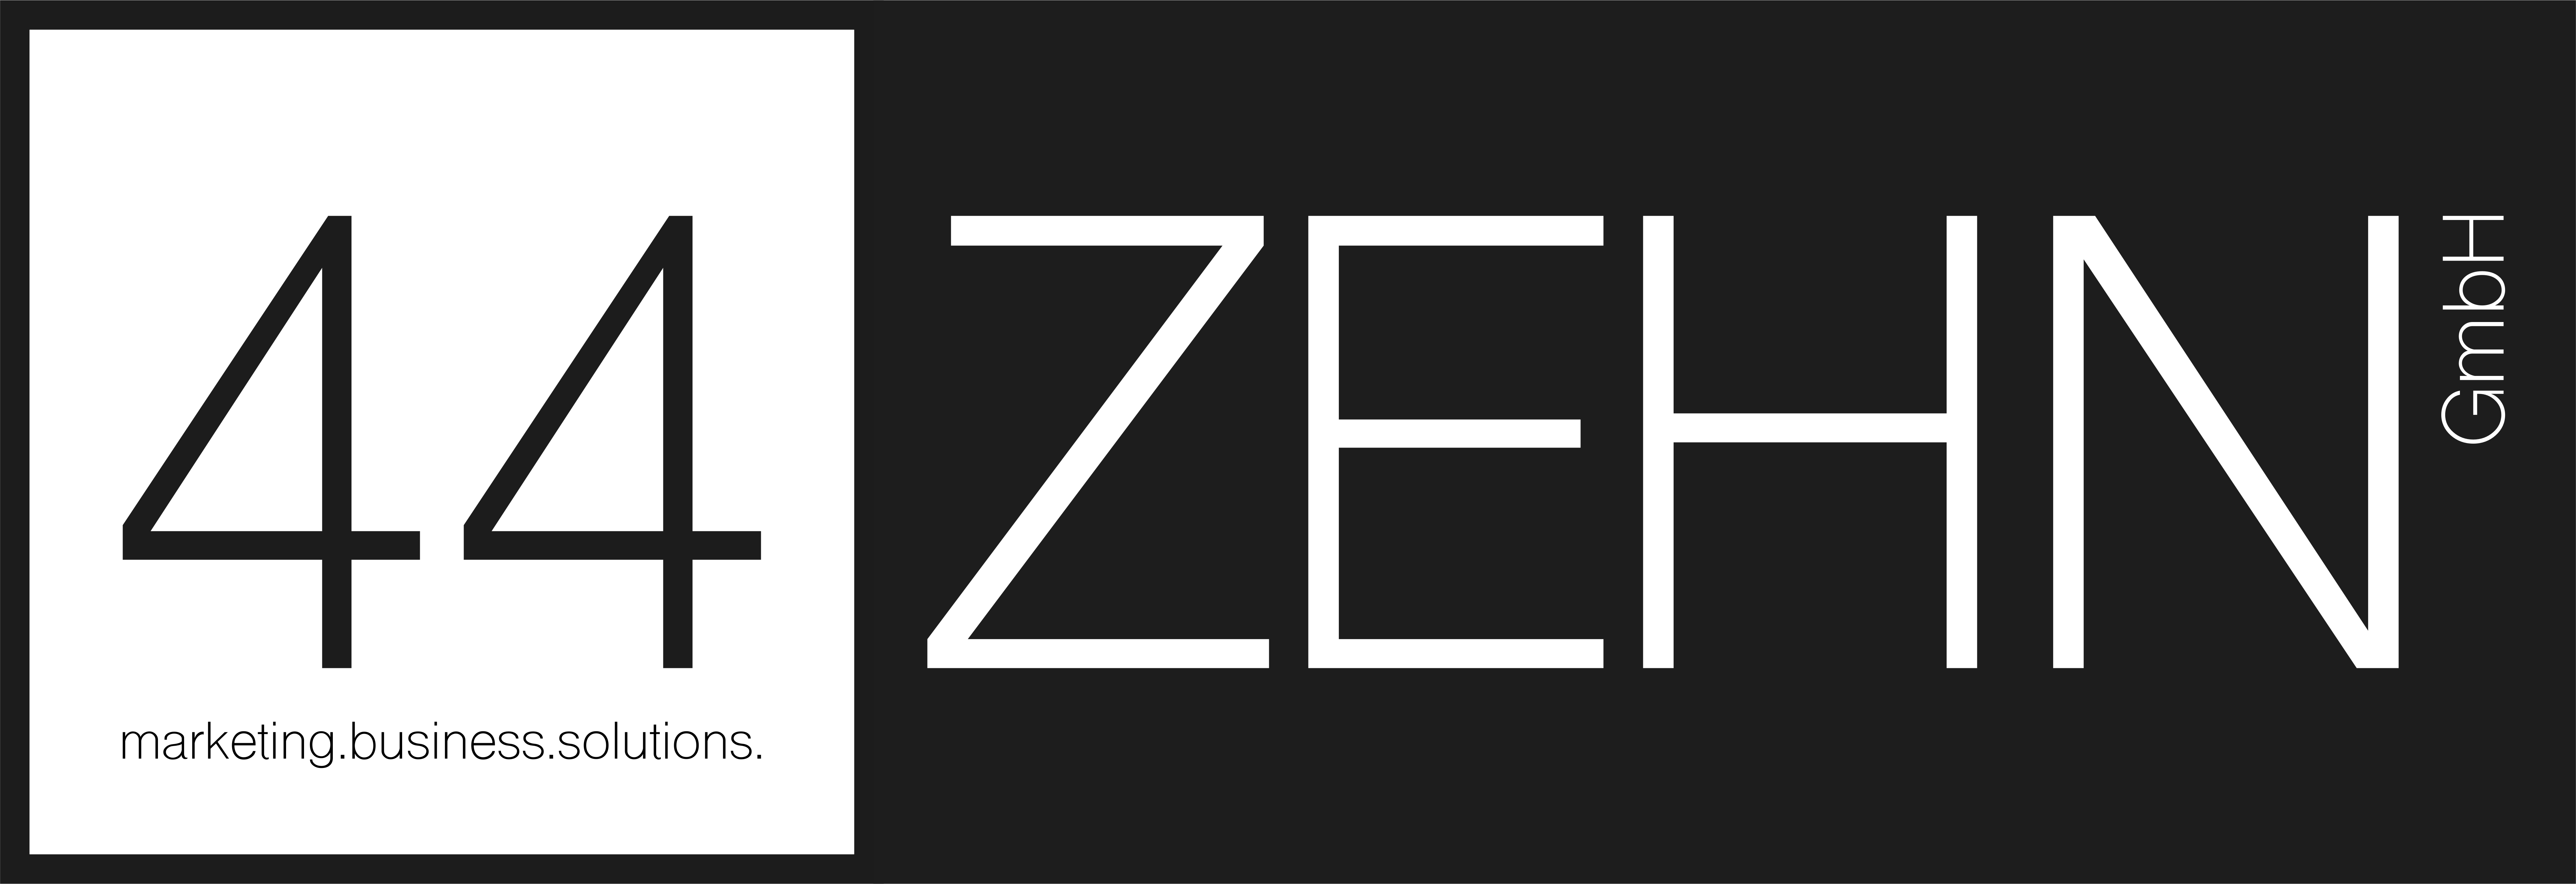 44ZEHN Logo